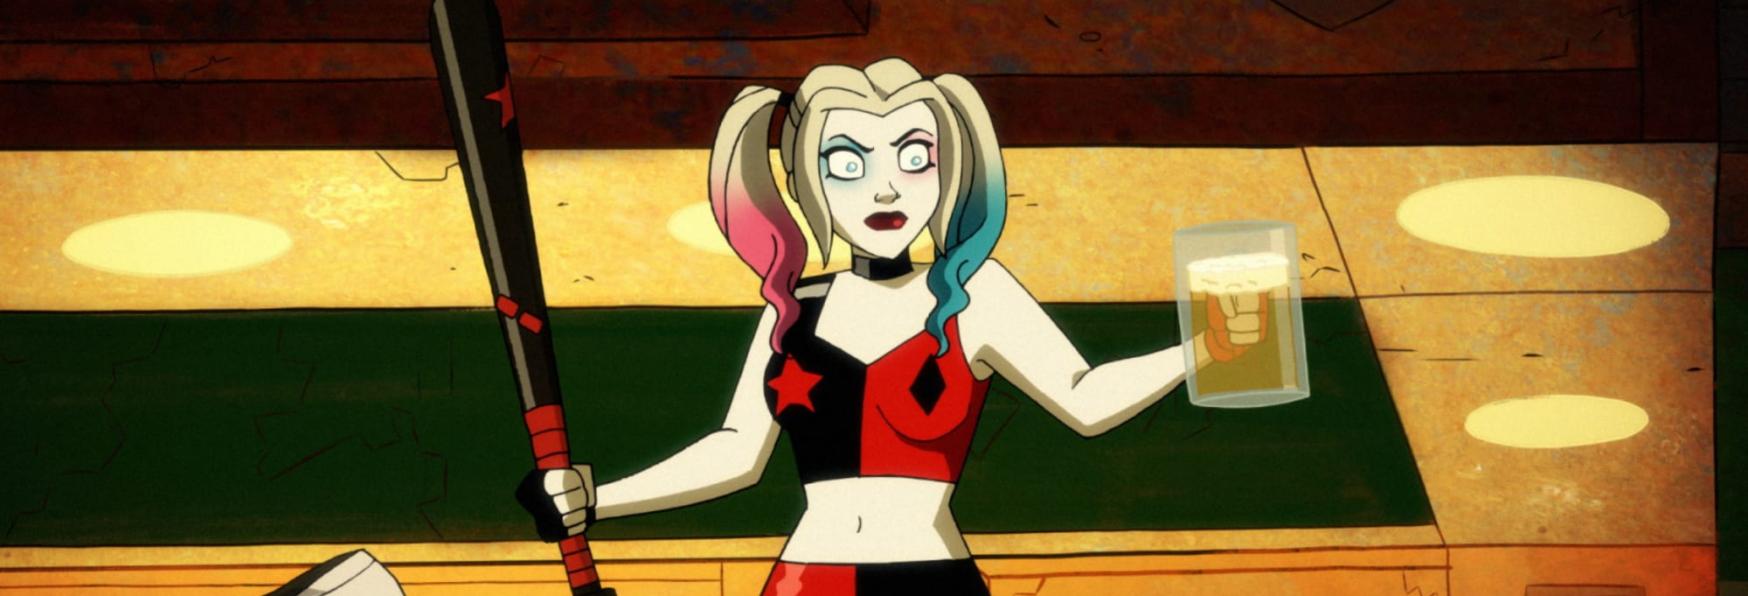 Harley Quinn 3: James Gunn nel Teaser Trailer della nuova Stagione